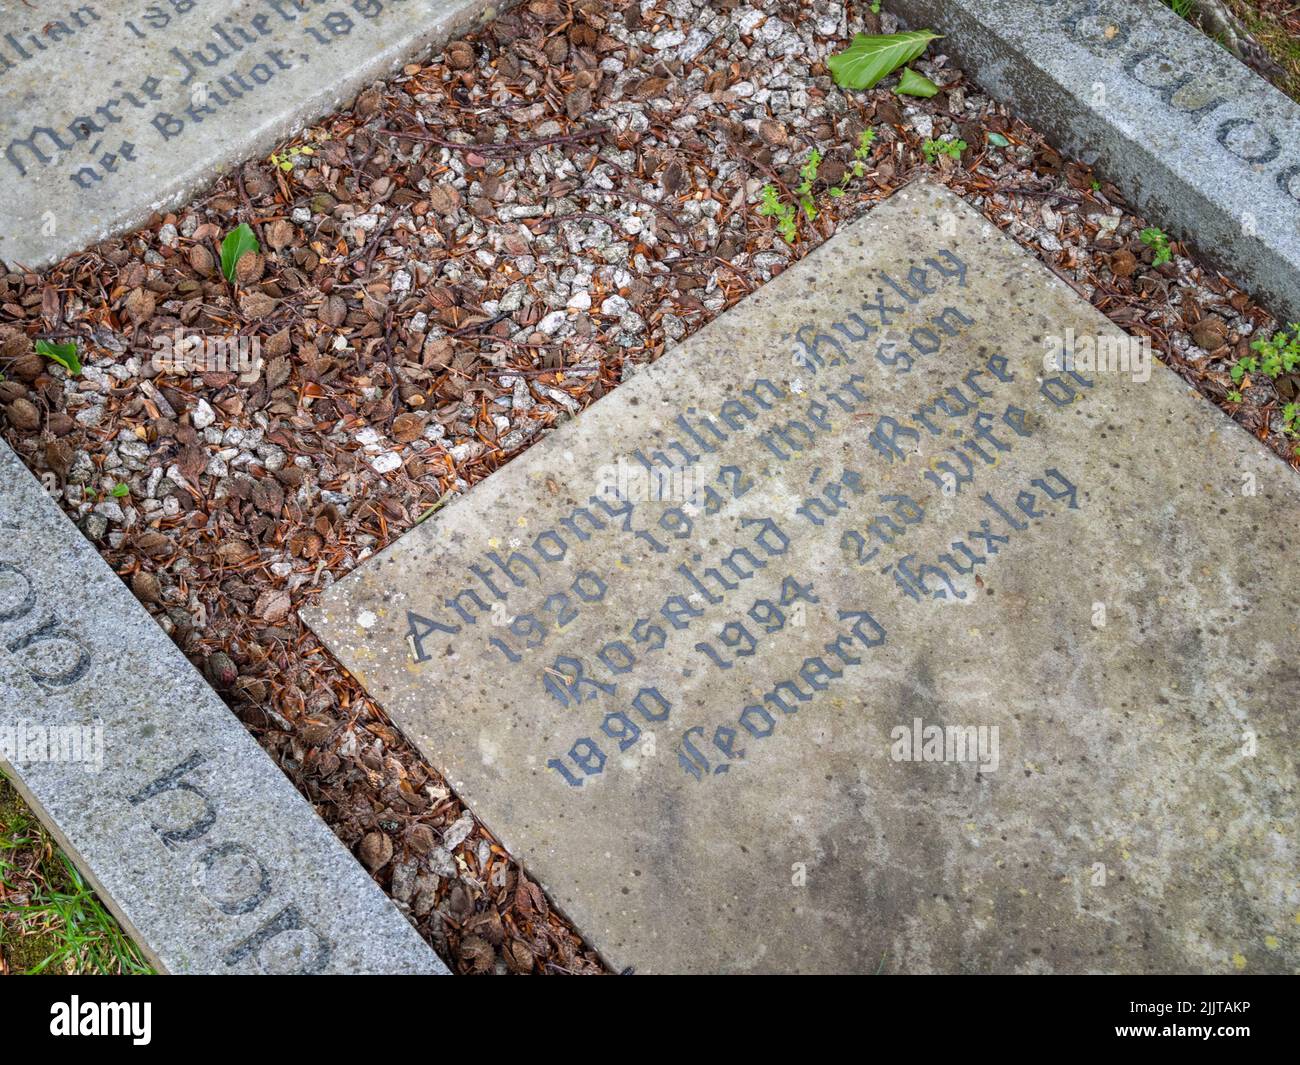 La tumba de la familia Huxley, donde las cenizas del famoso autor Aldous Huxley fueron enterradas; Watts Mortuary Chapel, Compton, Guildford, Surrey, REINO UNIDO Foto de stock